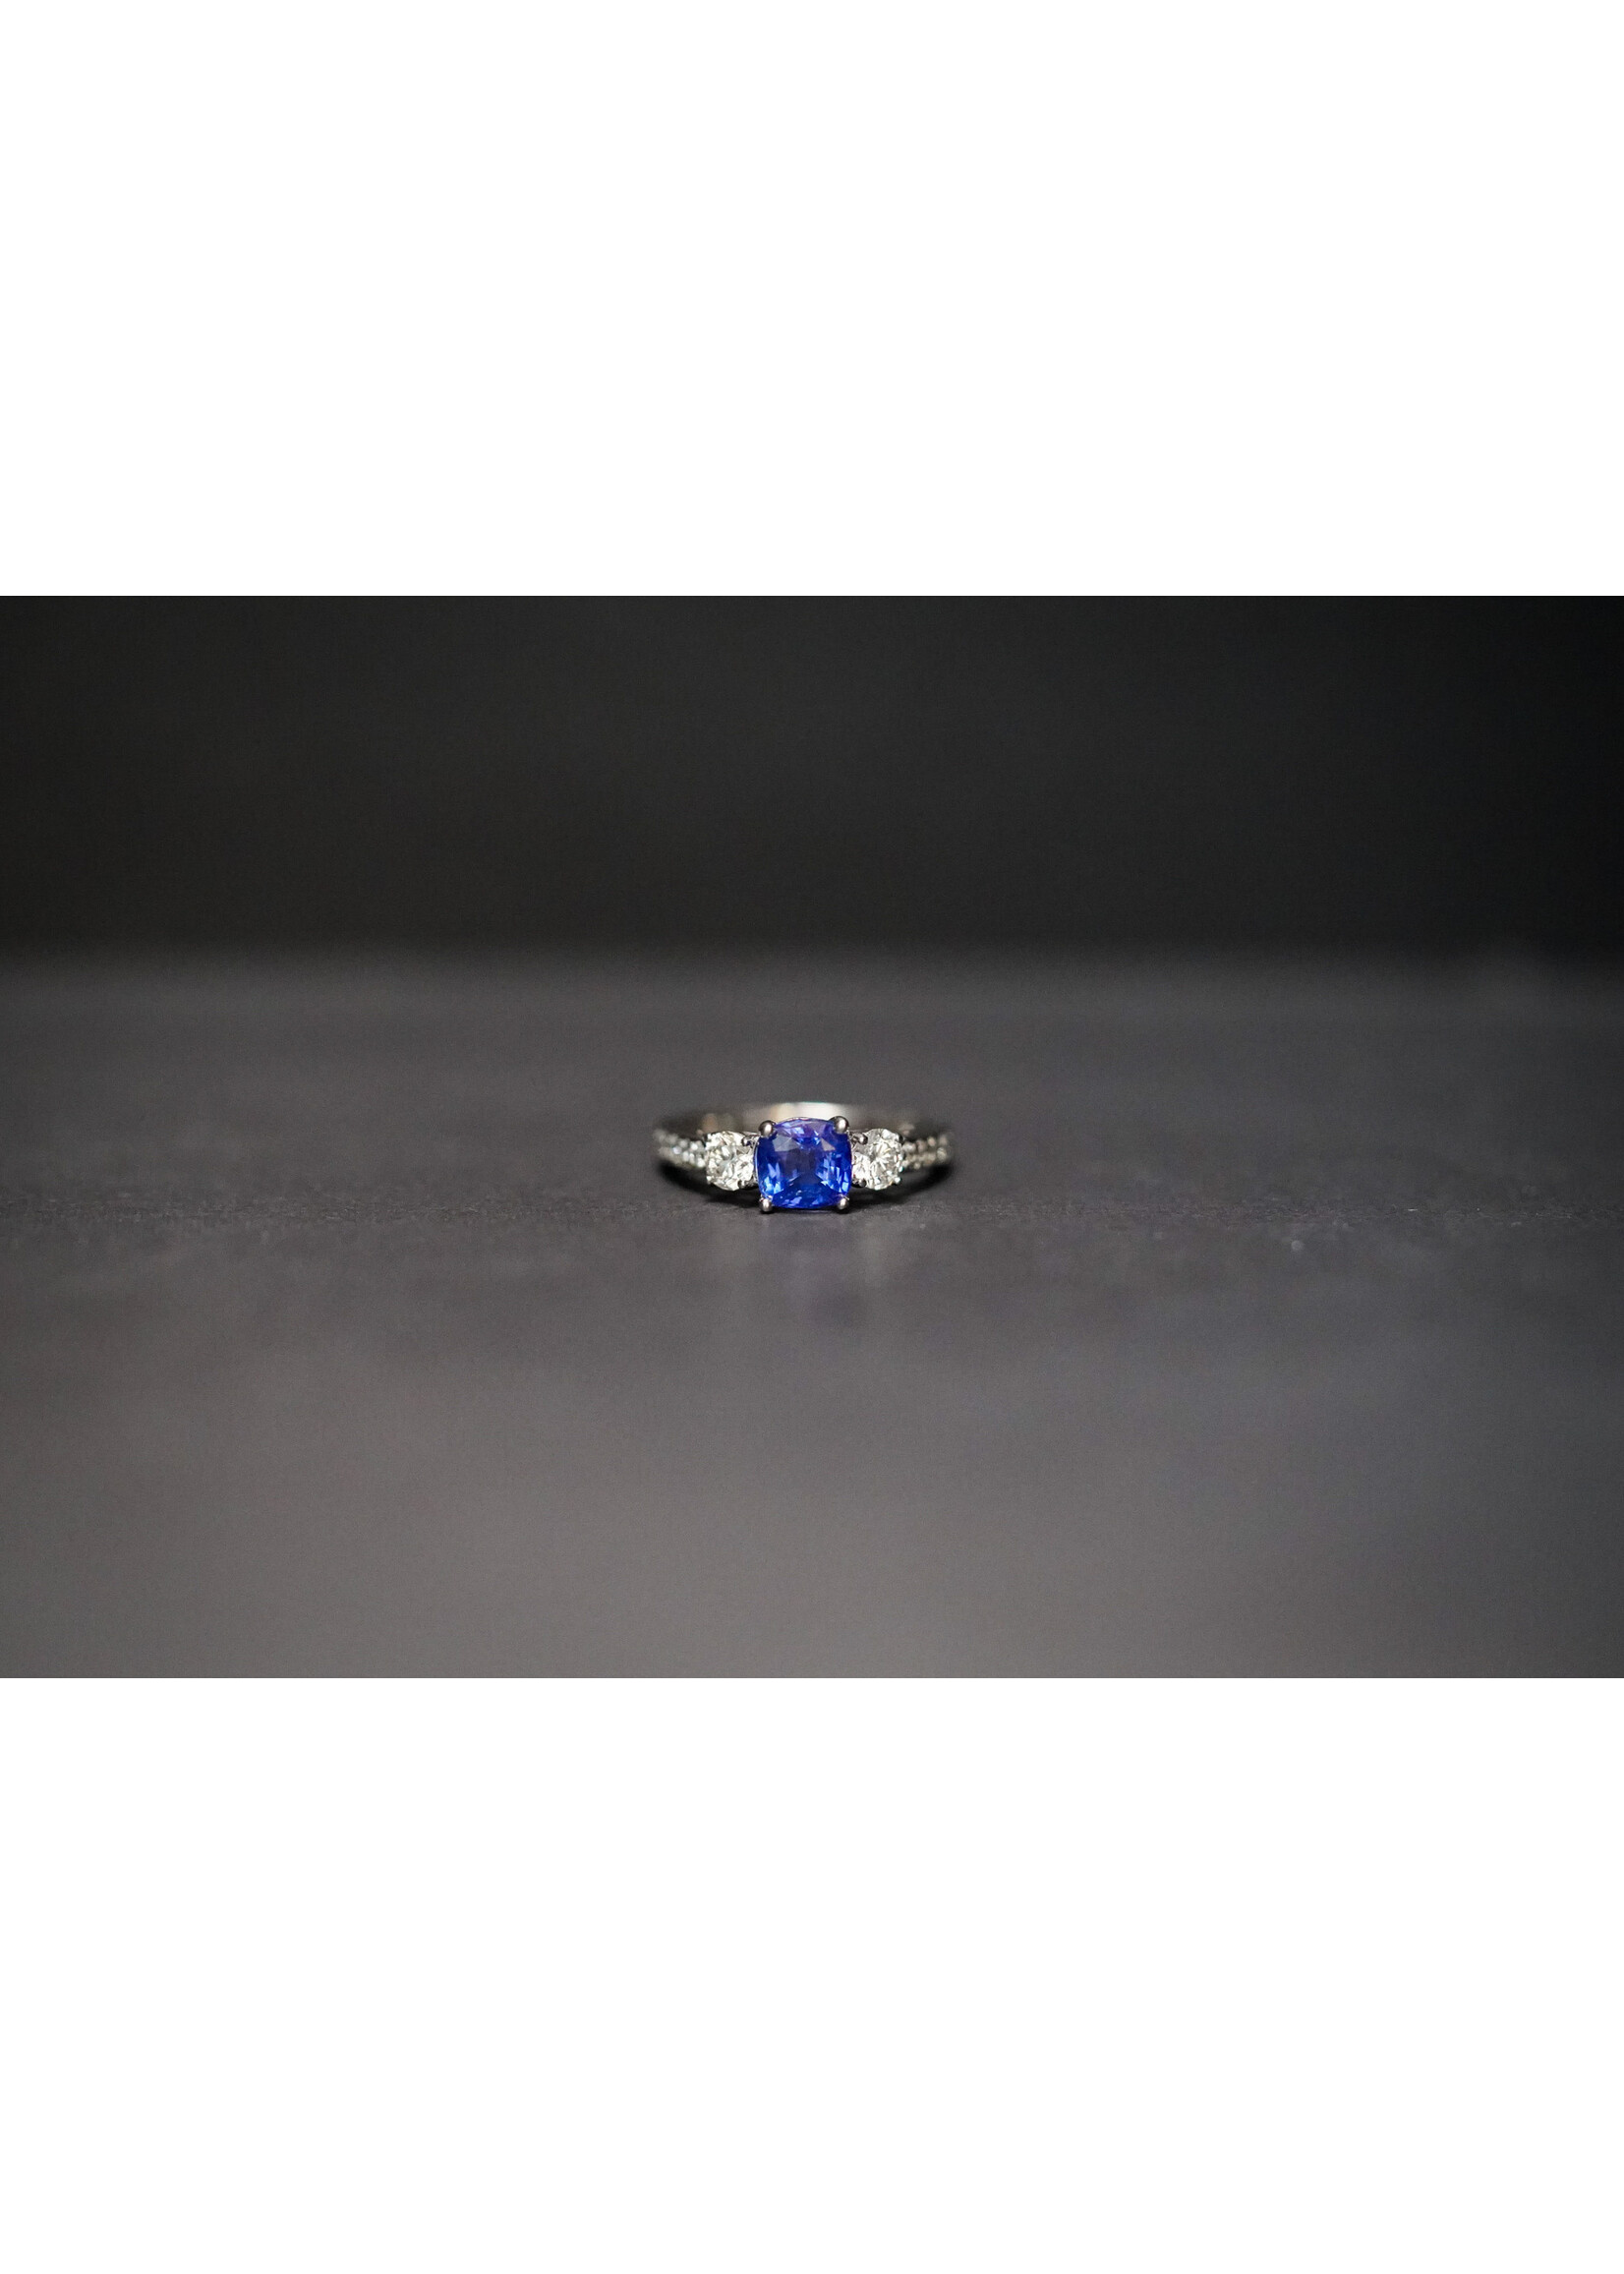 14KW 3.45g 2.40ctw (1.65ctr) Sapphire & Diamond Fashion Ring (size 6.5)